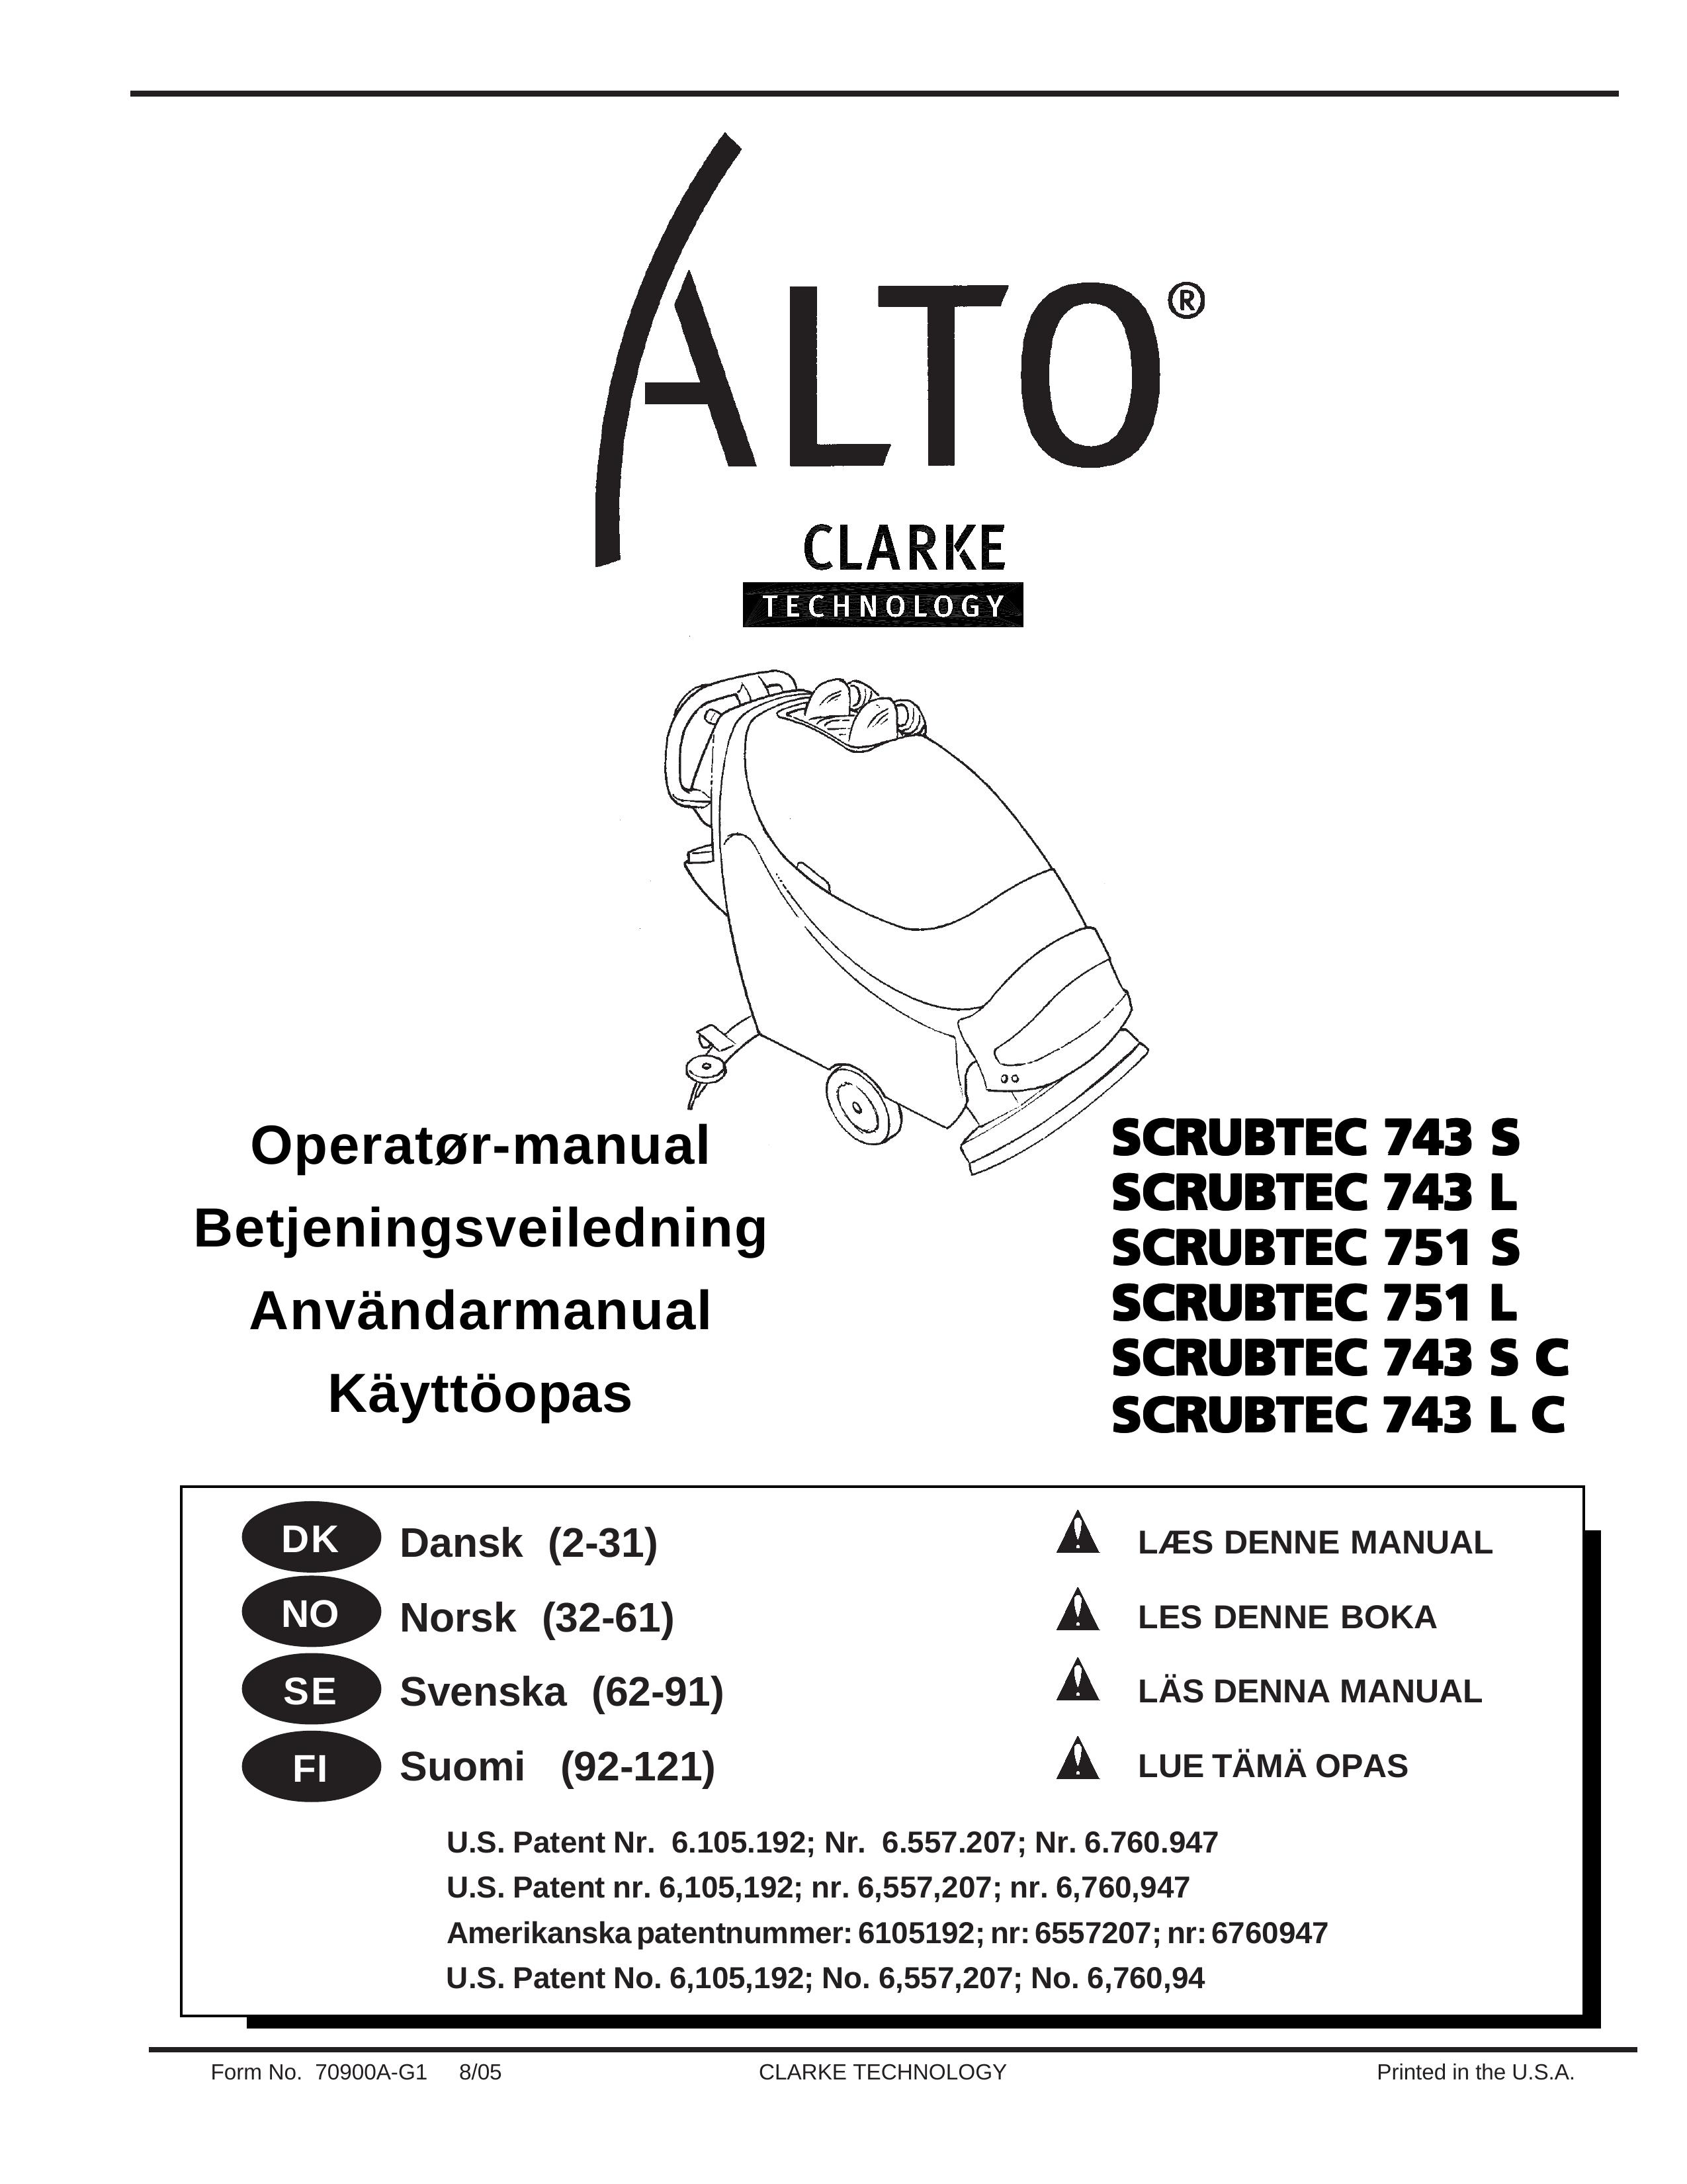 Nilfisk-ALTO 751 L Clothes Dryer User Manual